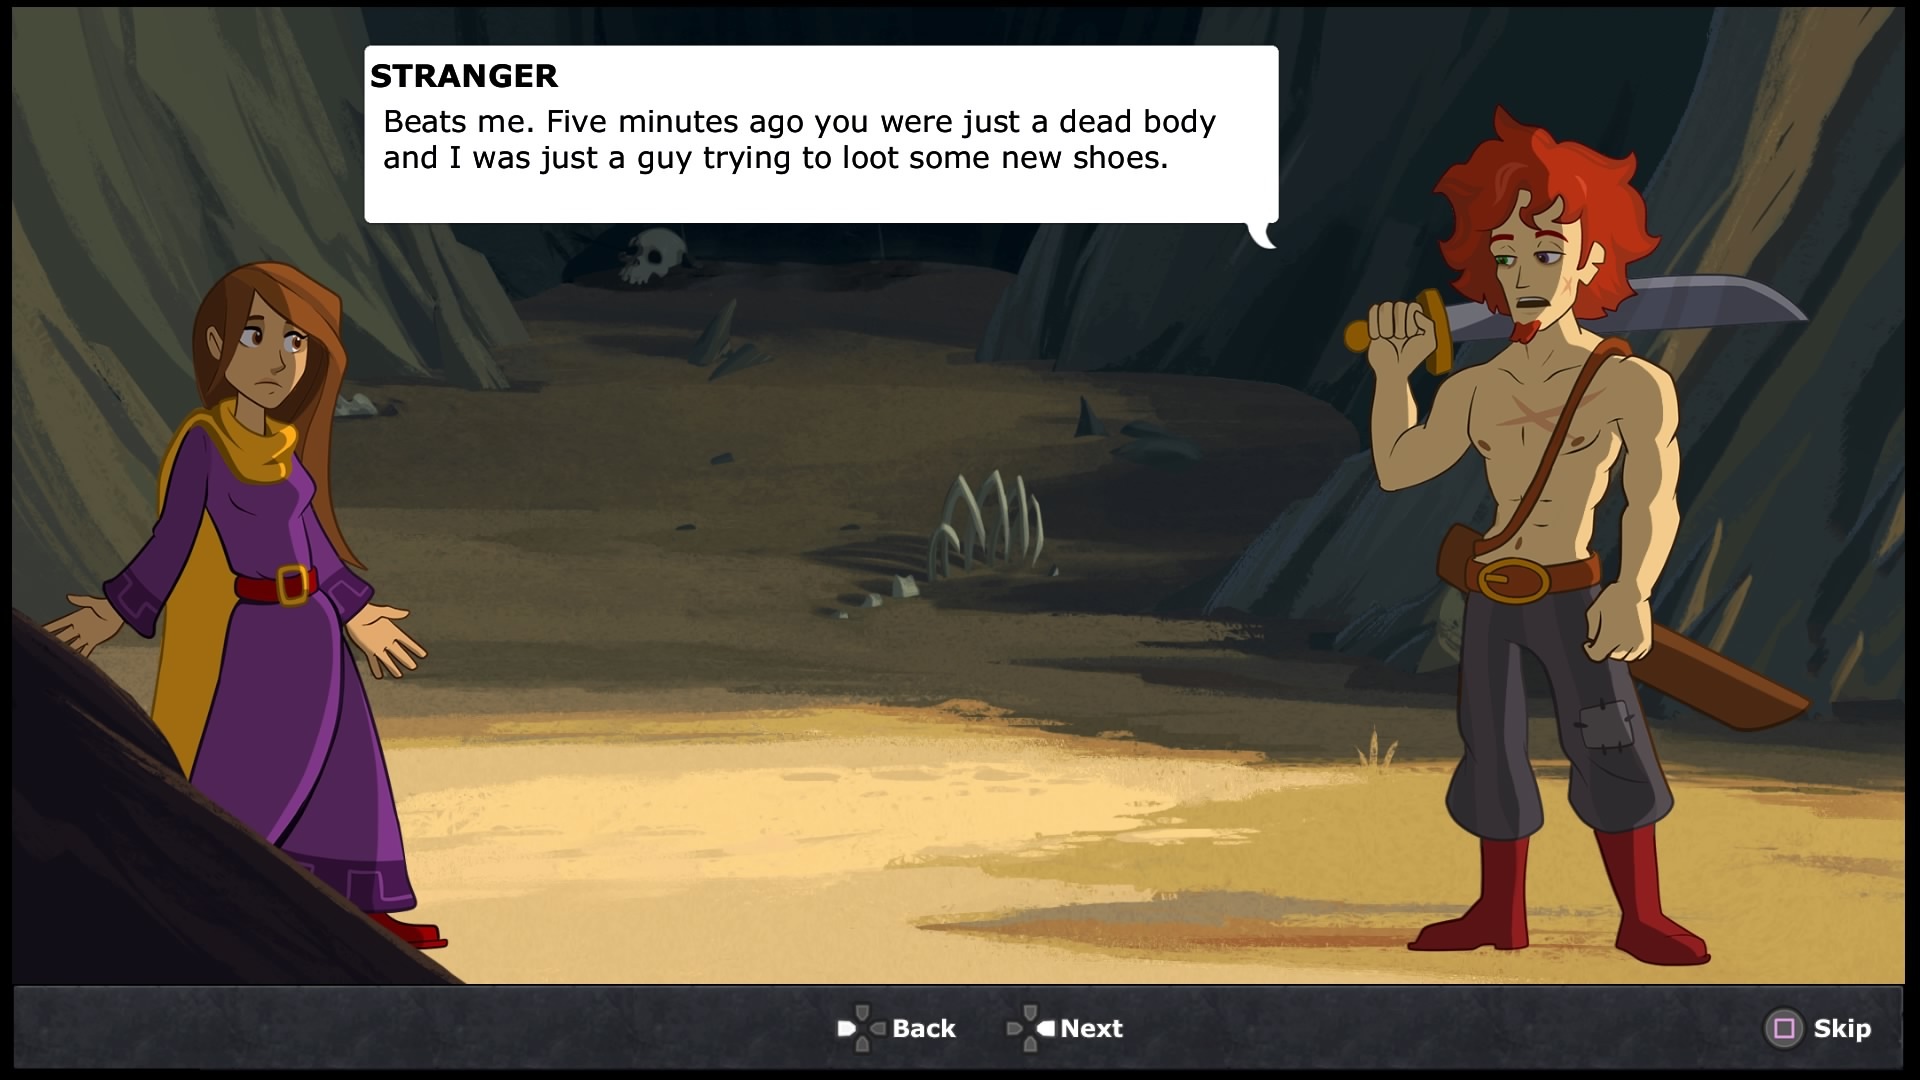 Defender's Quest: Valley of the Forgotten screenshot